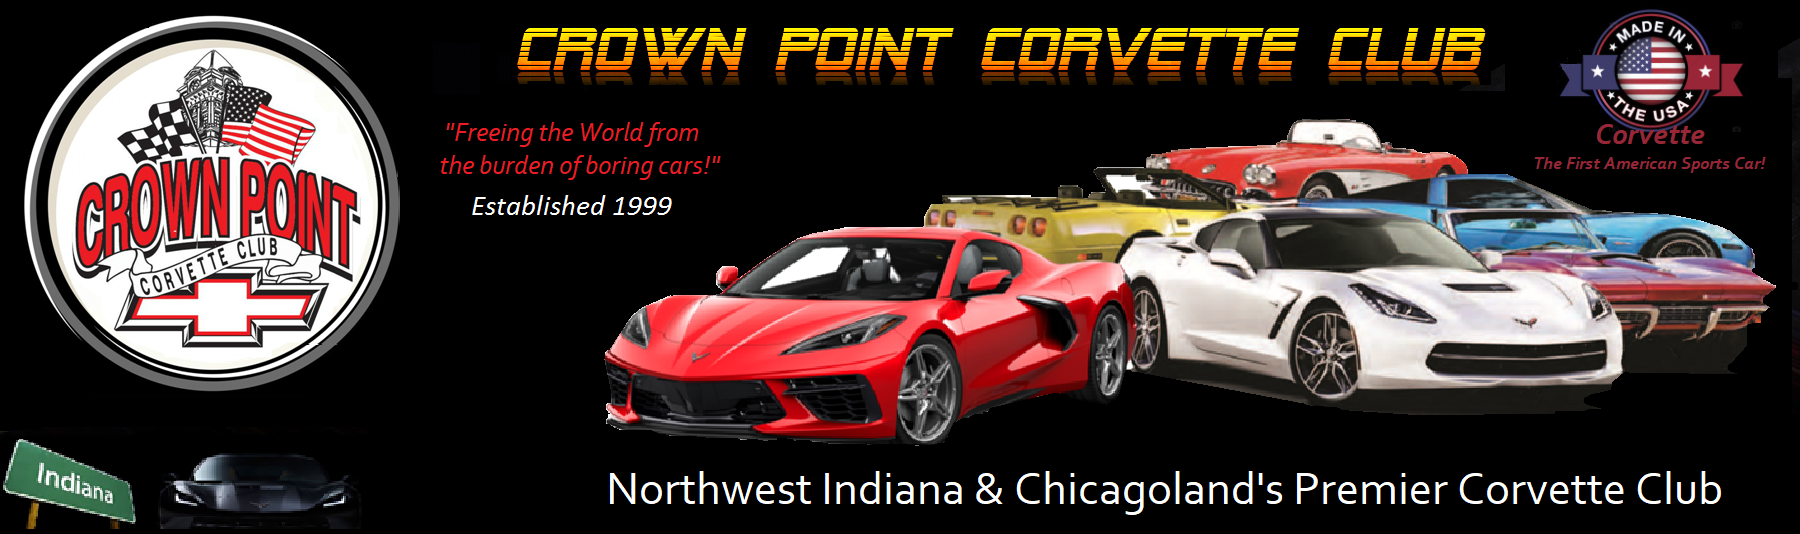 Crown Point Corvette Club